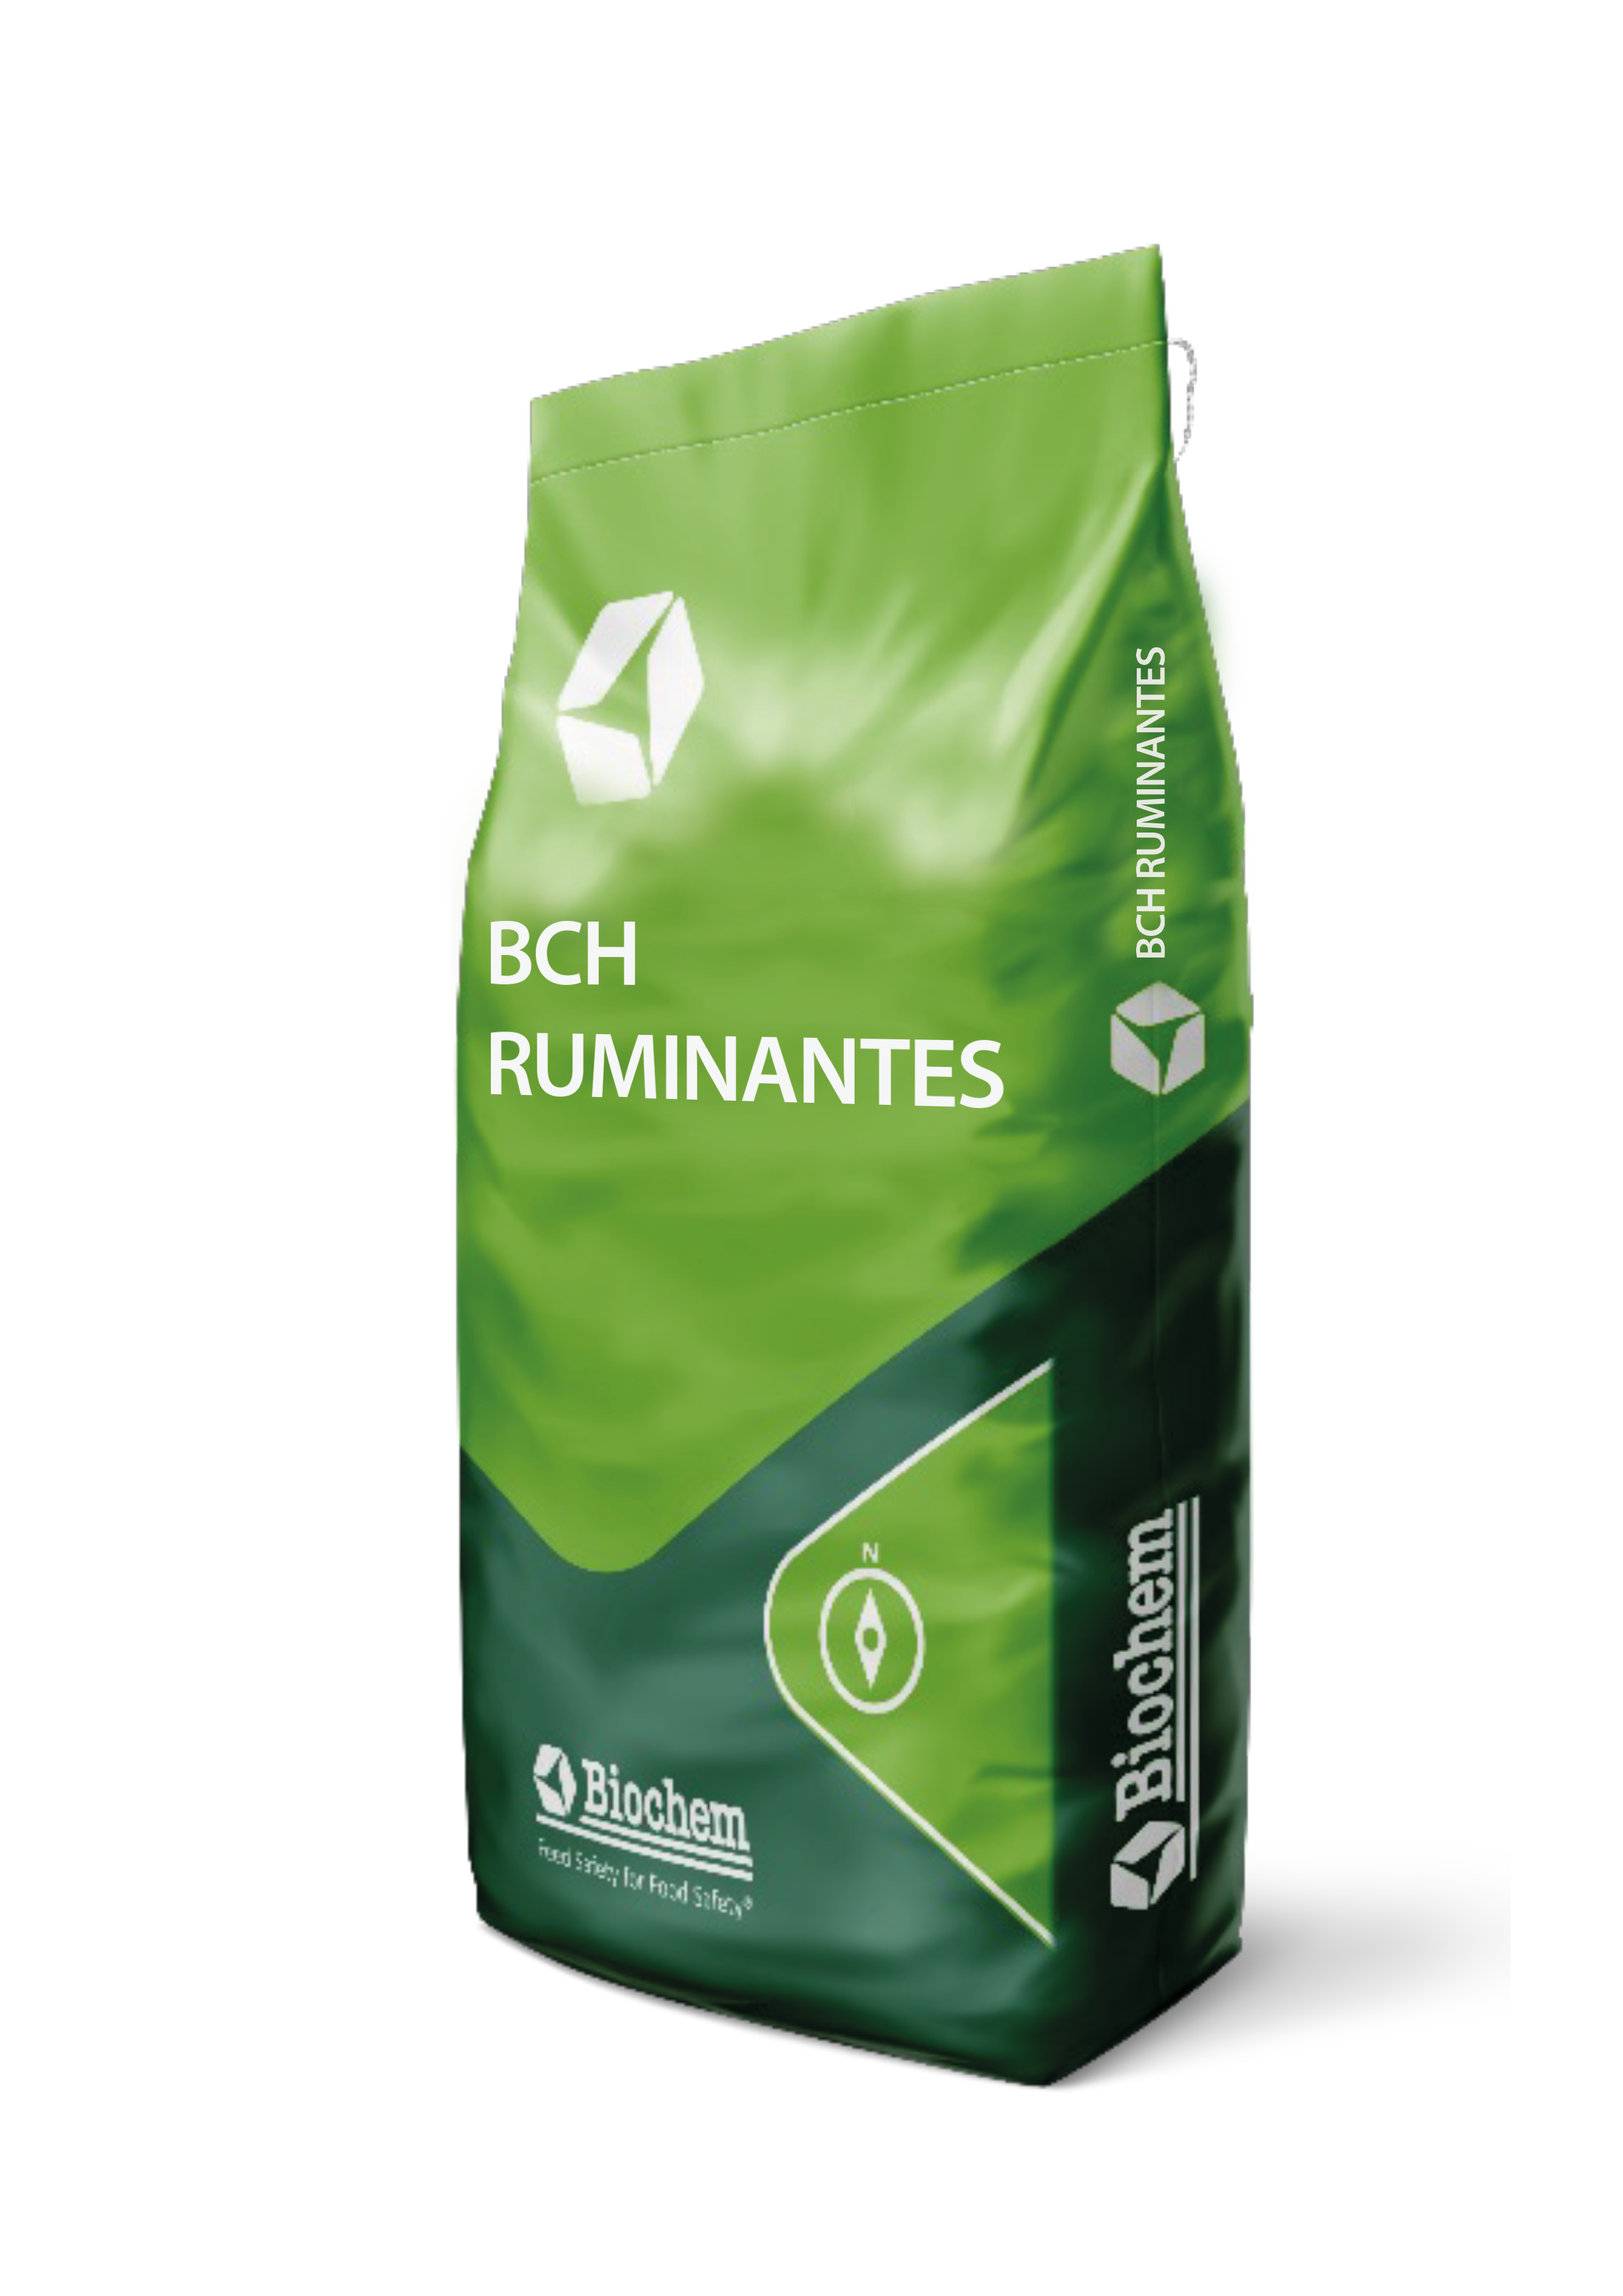 BCH Ruminantes